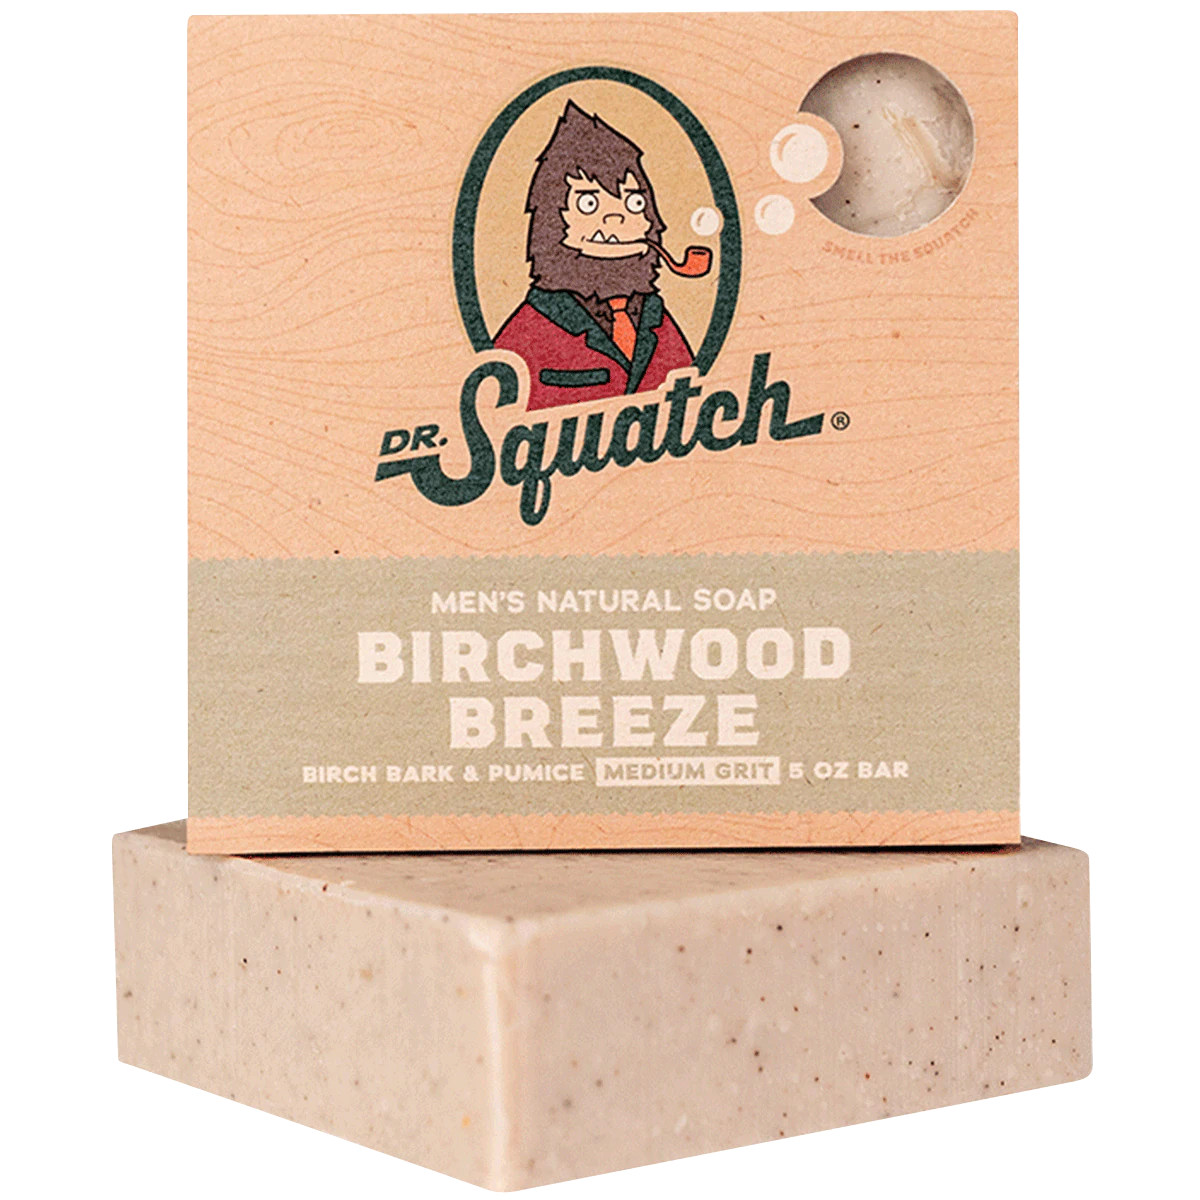 Dr. Squatch Men's Natural Soap Birchwood Breeze 5oz Bar